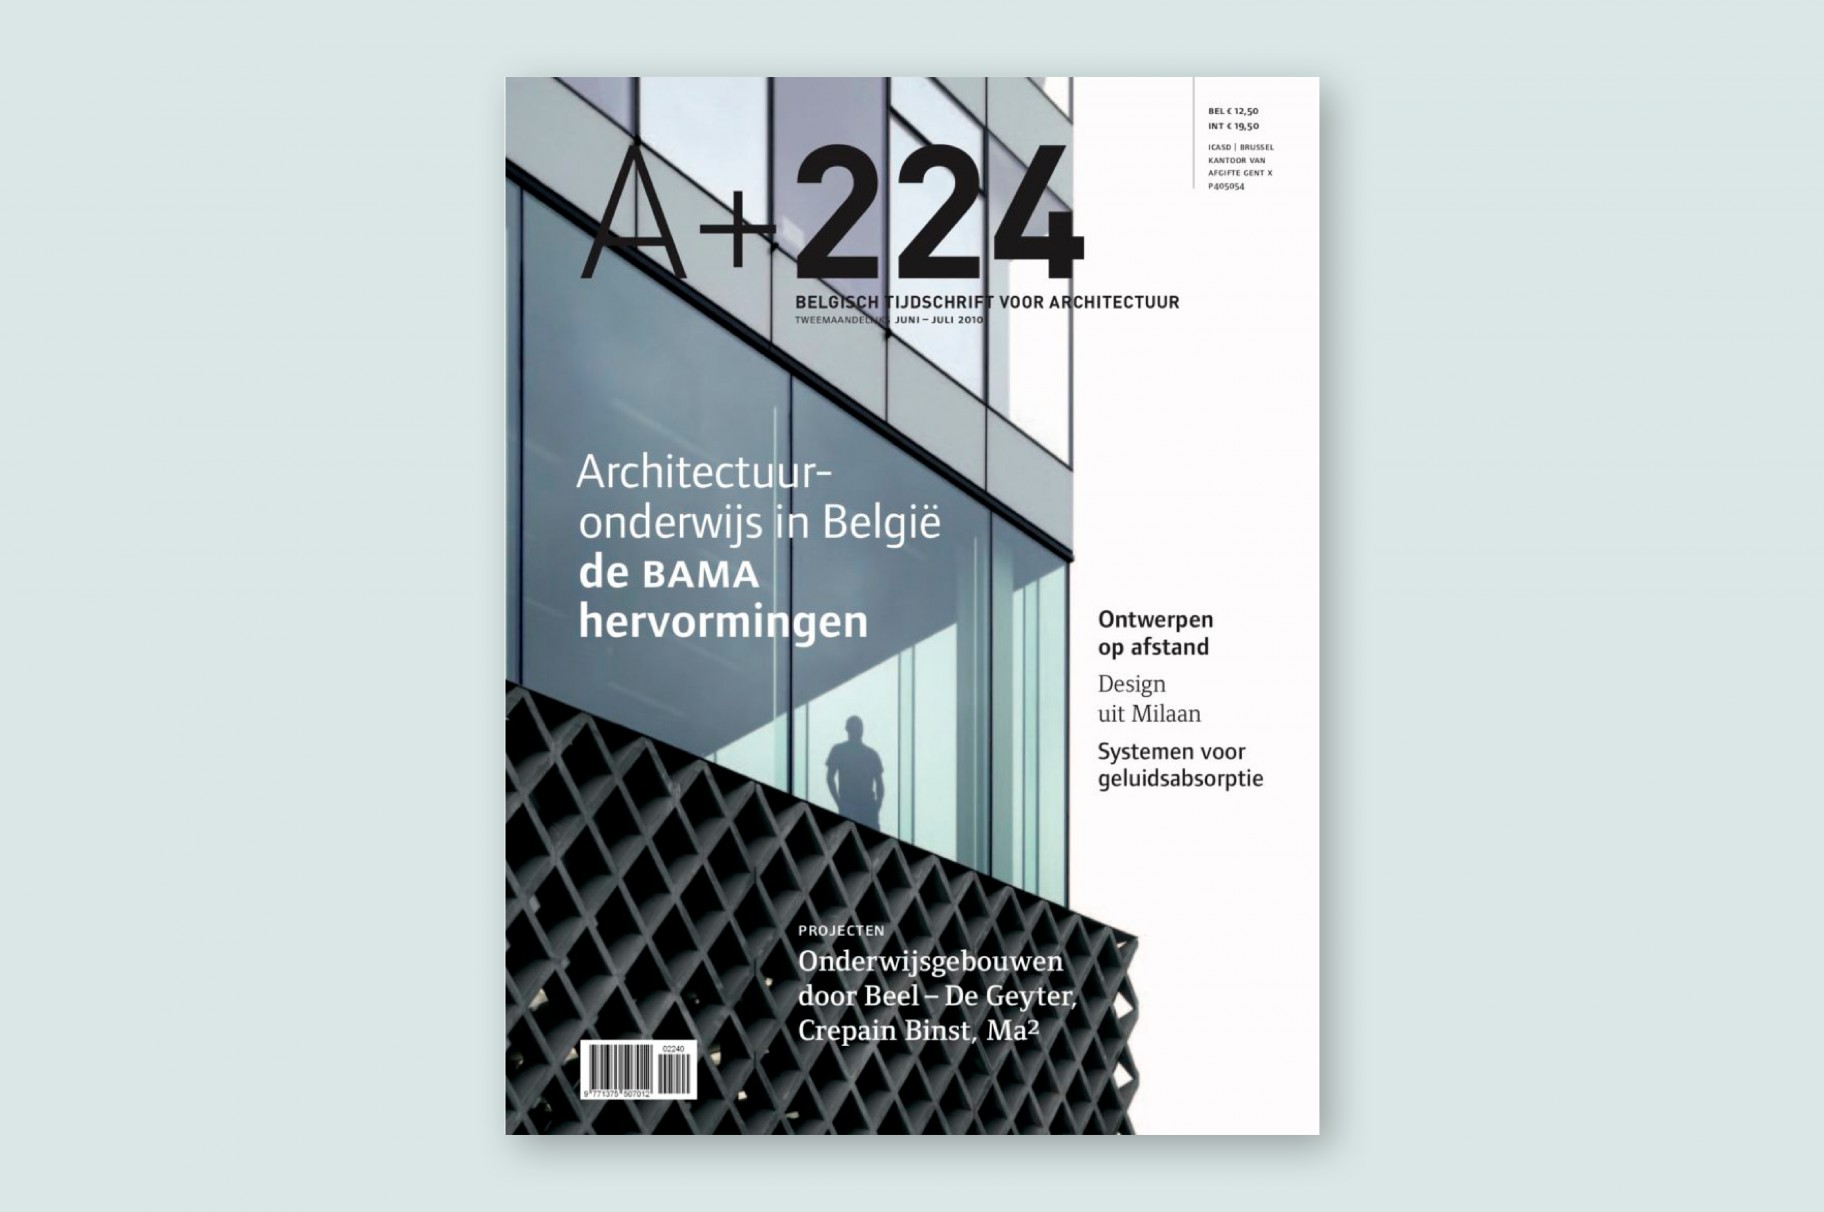 Vakgroep Architectuur VUB in A+224